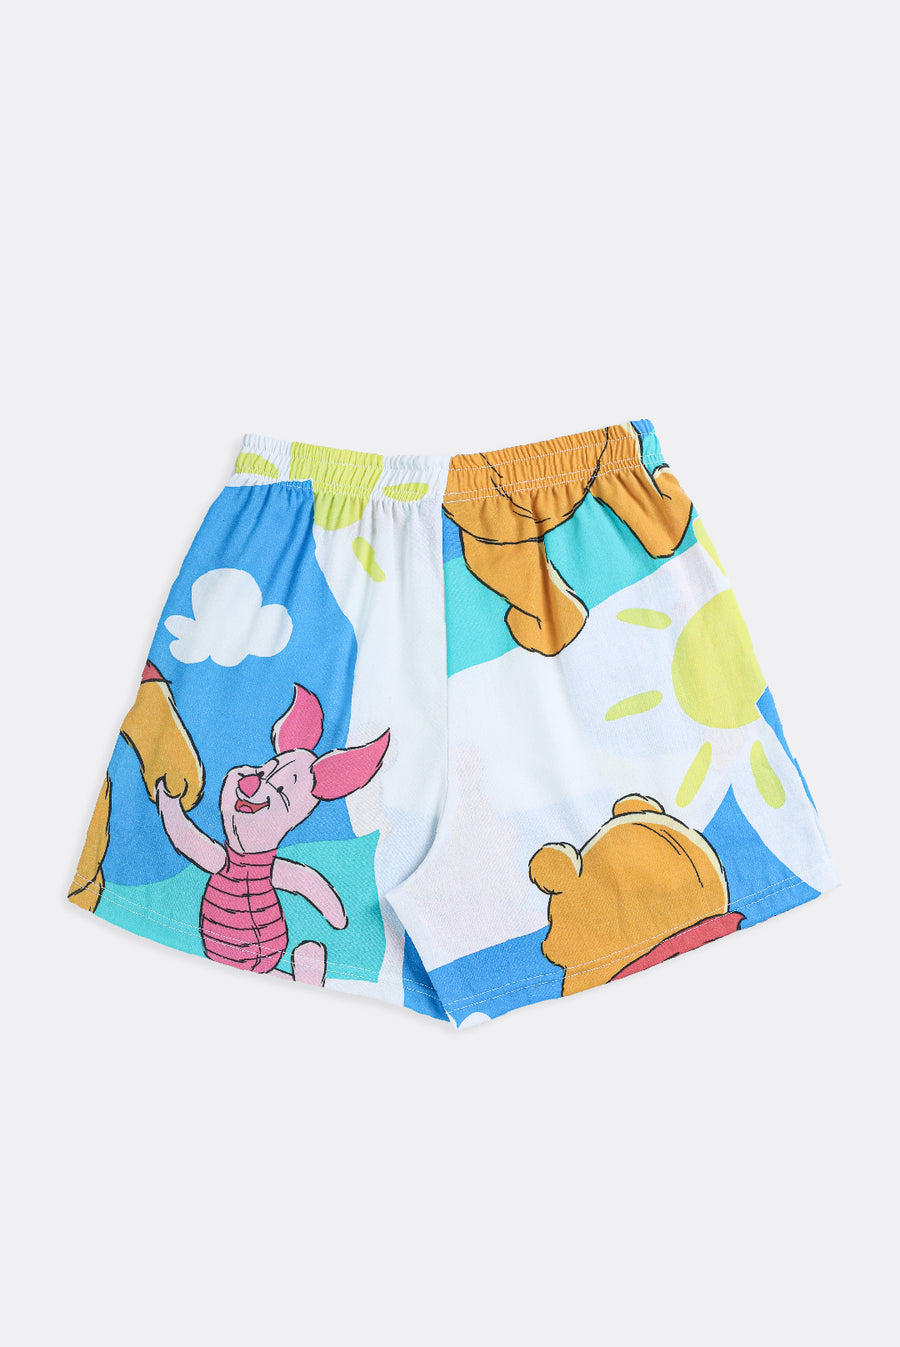 Unisex Rework Winnie the Pooh Boxer Shorts - S, M, L